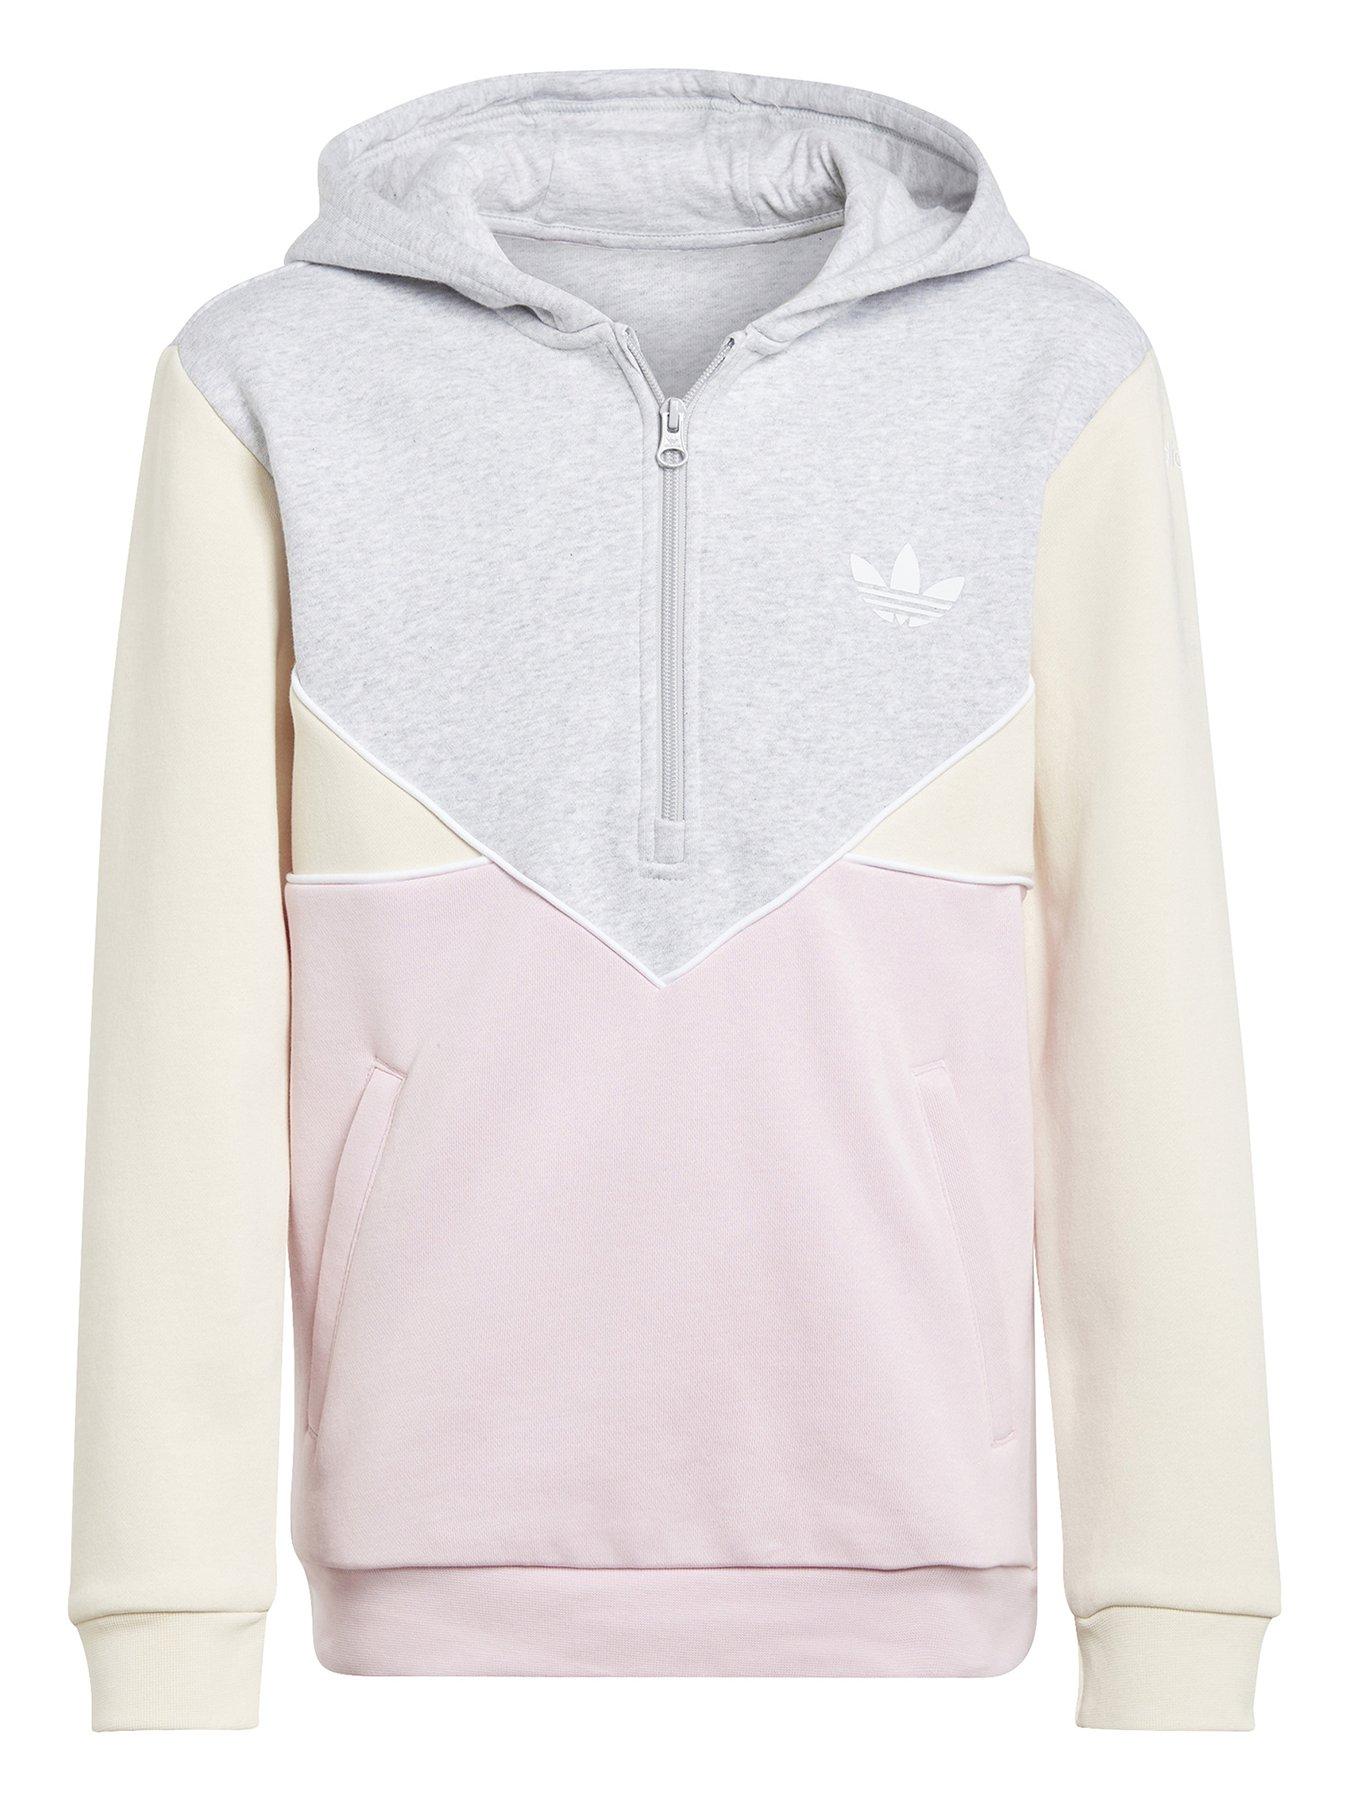 Pink | Adidas Very | | & & sweatshirts baby Child | Sportswear Ireland | Hoodies